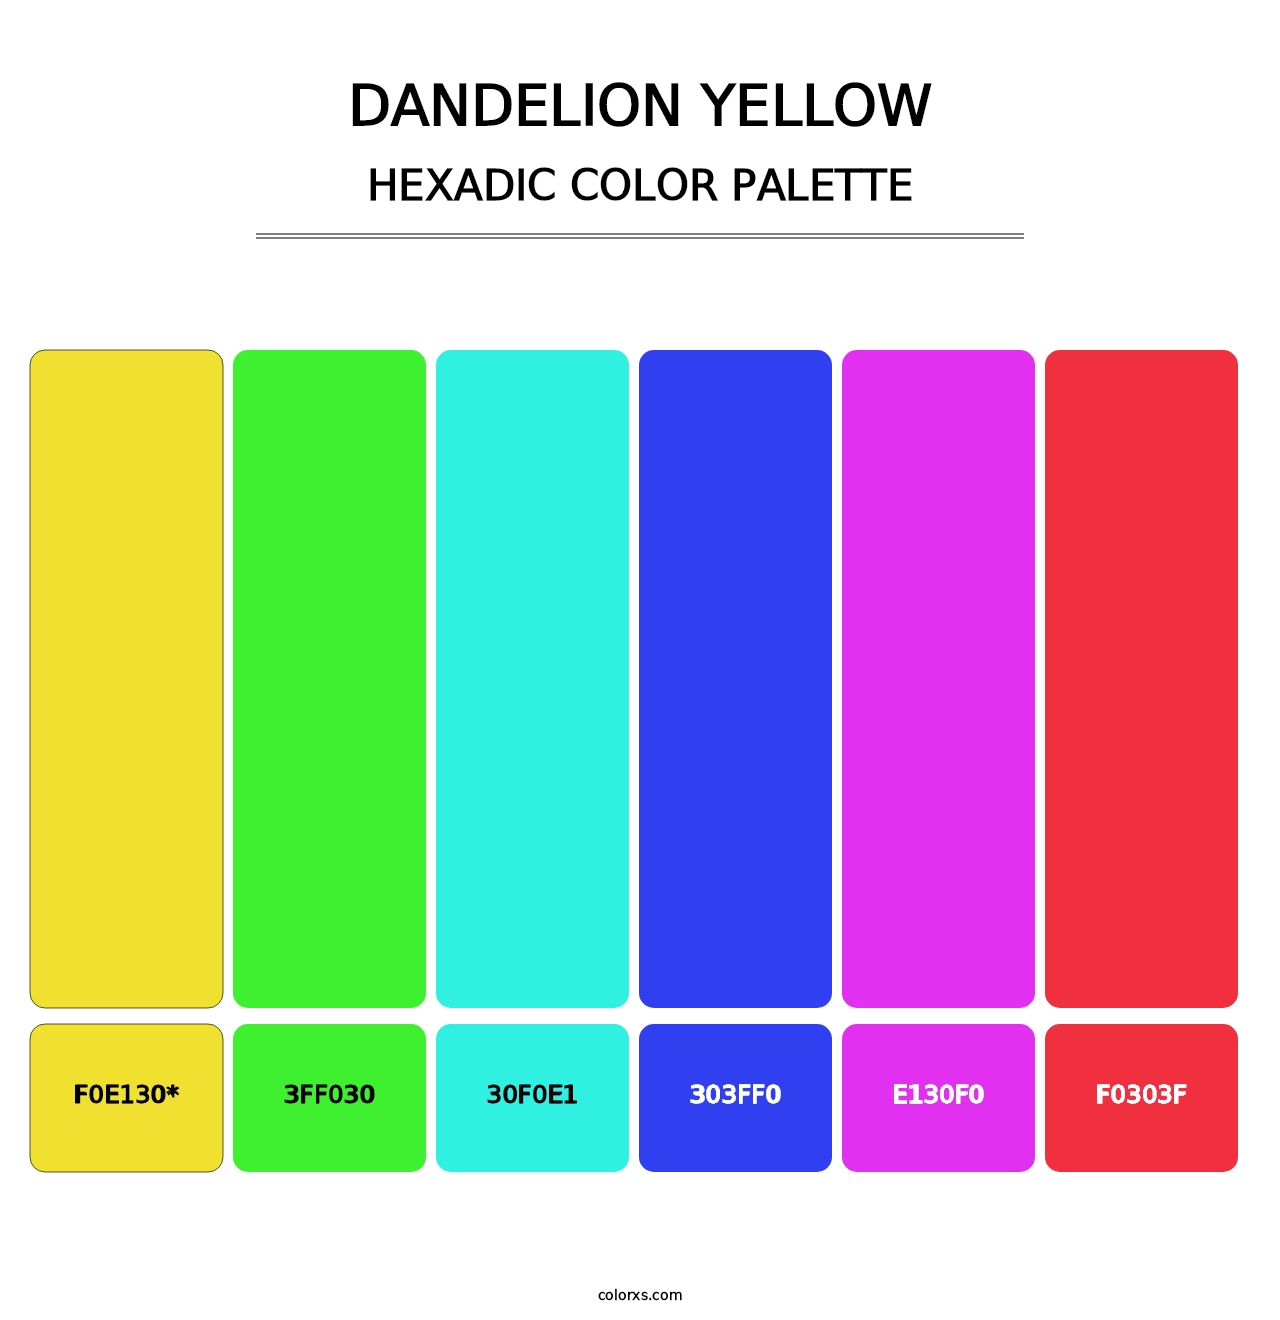 Dandelion Yellow - Hexadic Color Palette